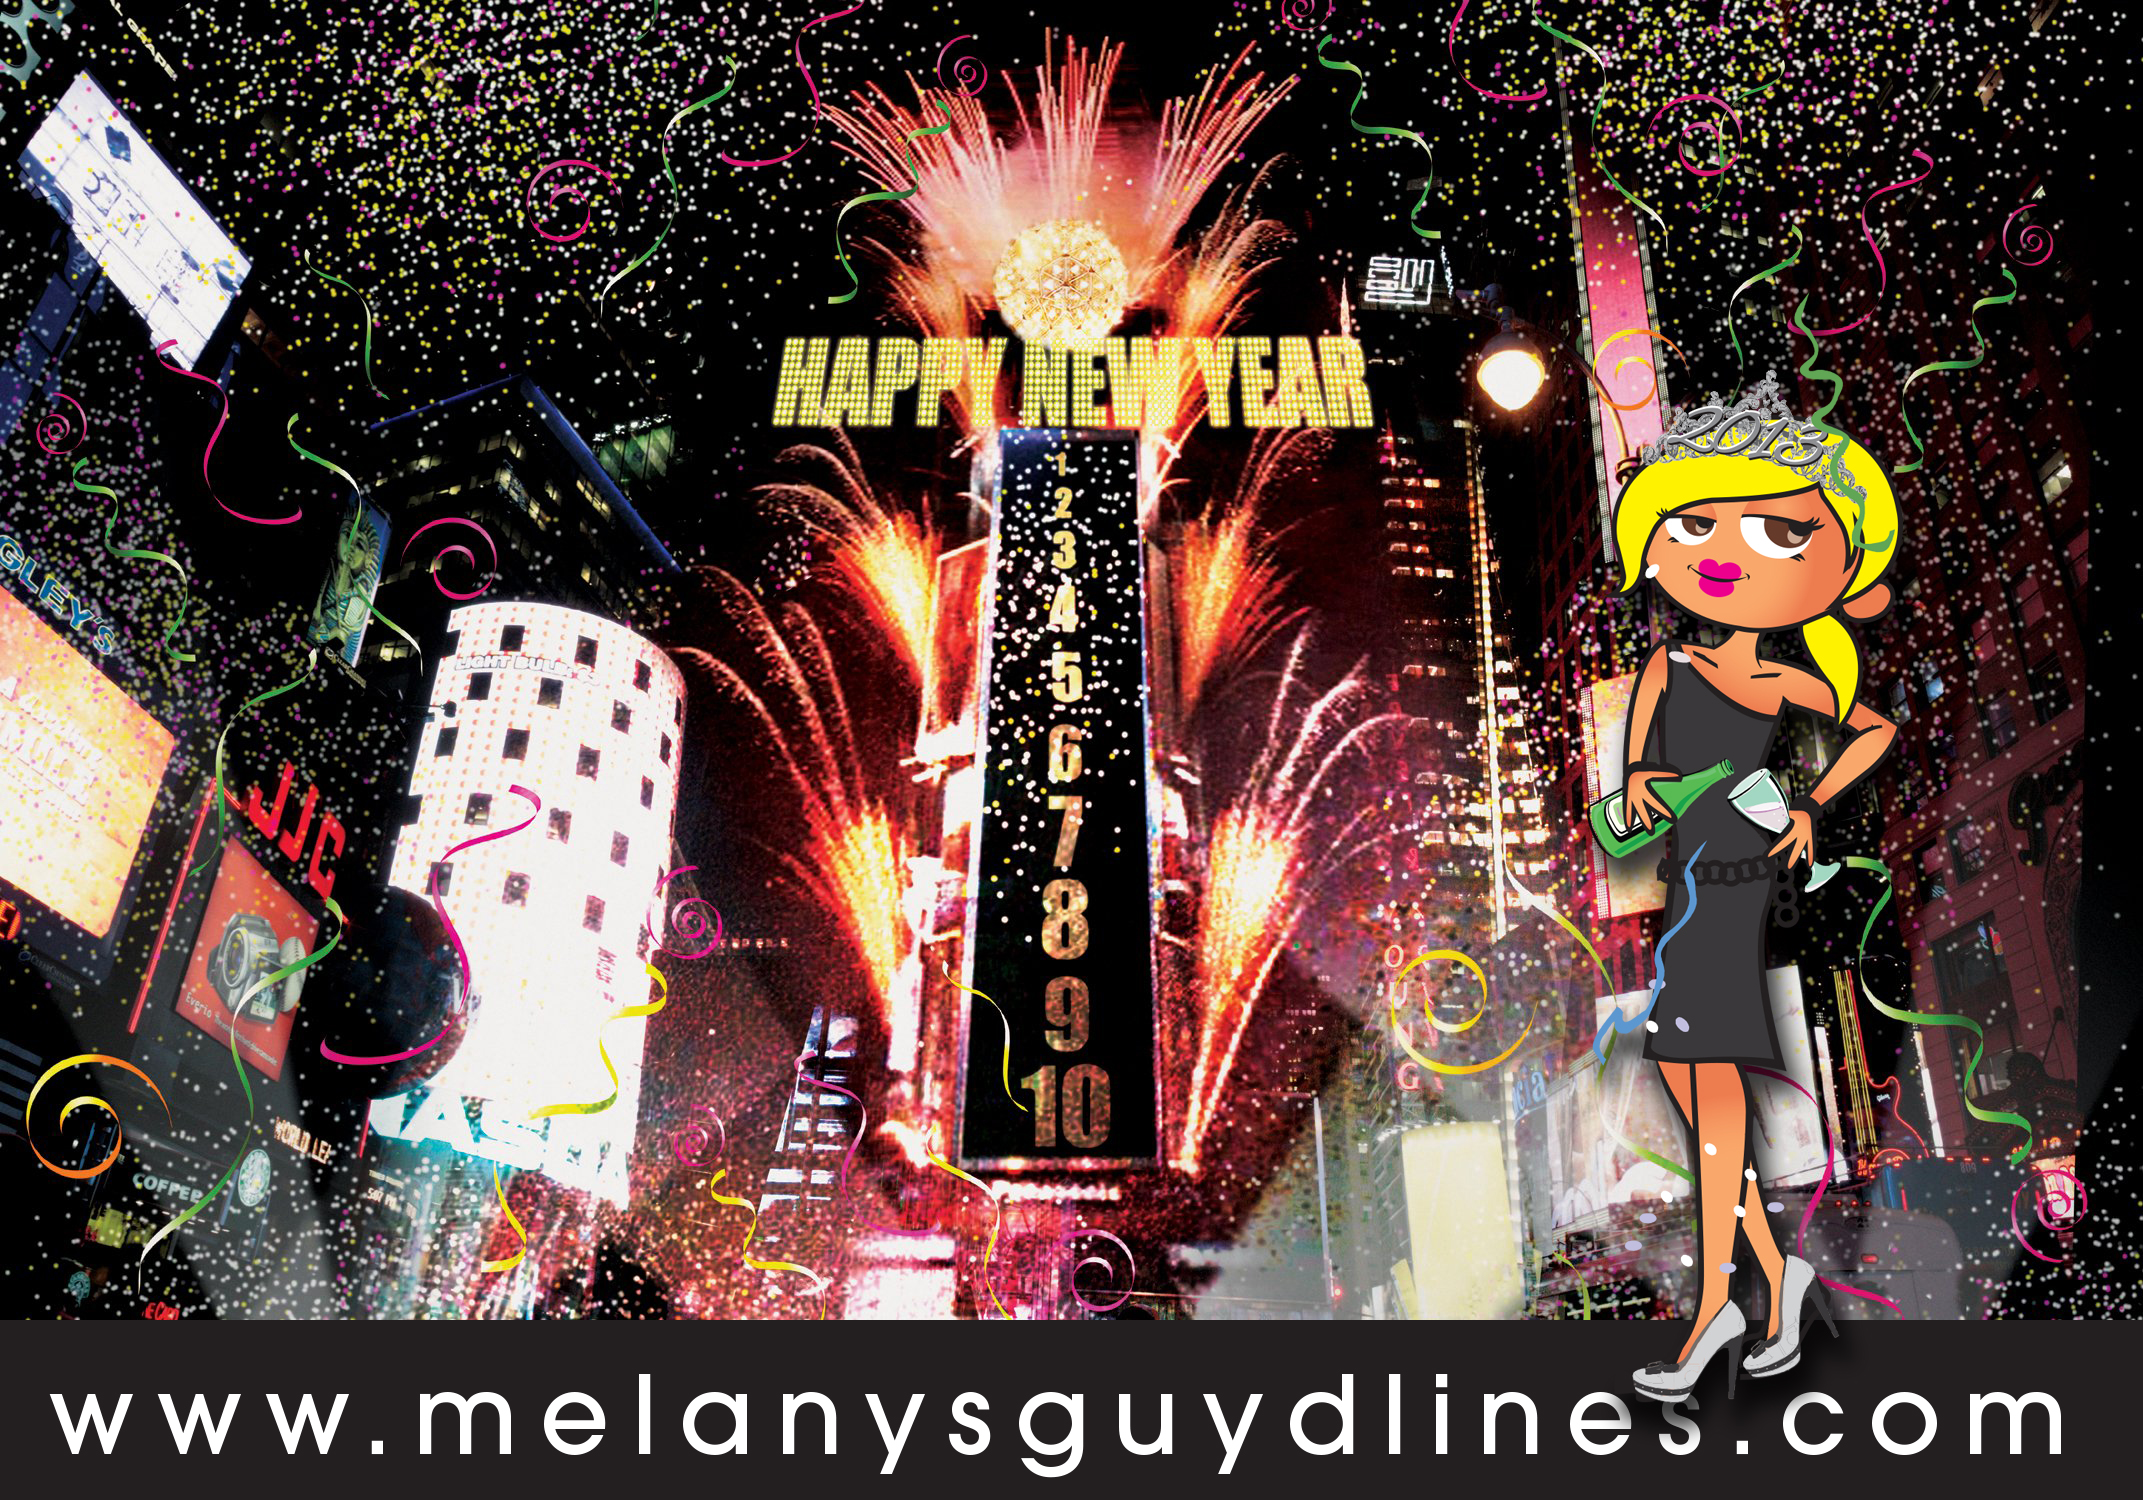 happy new year from melanysguydlines